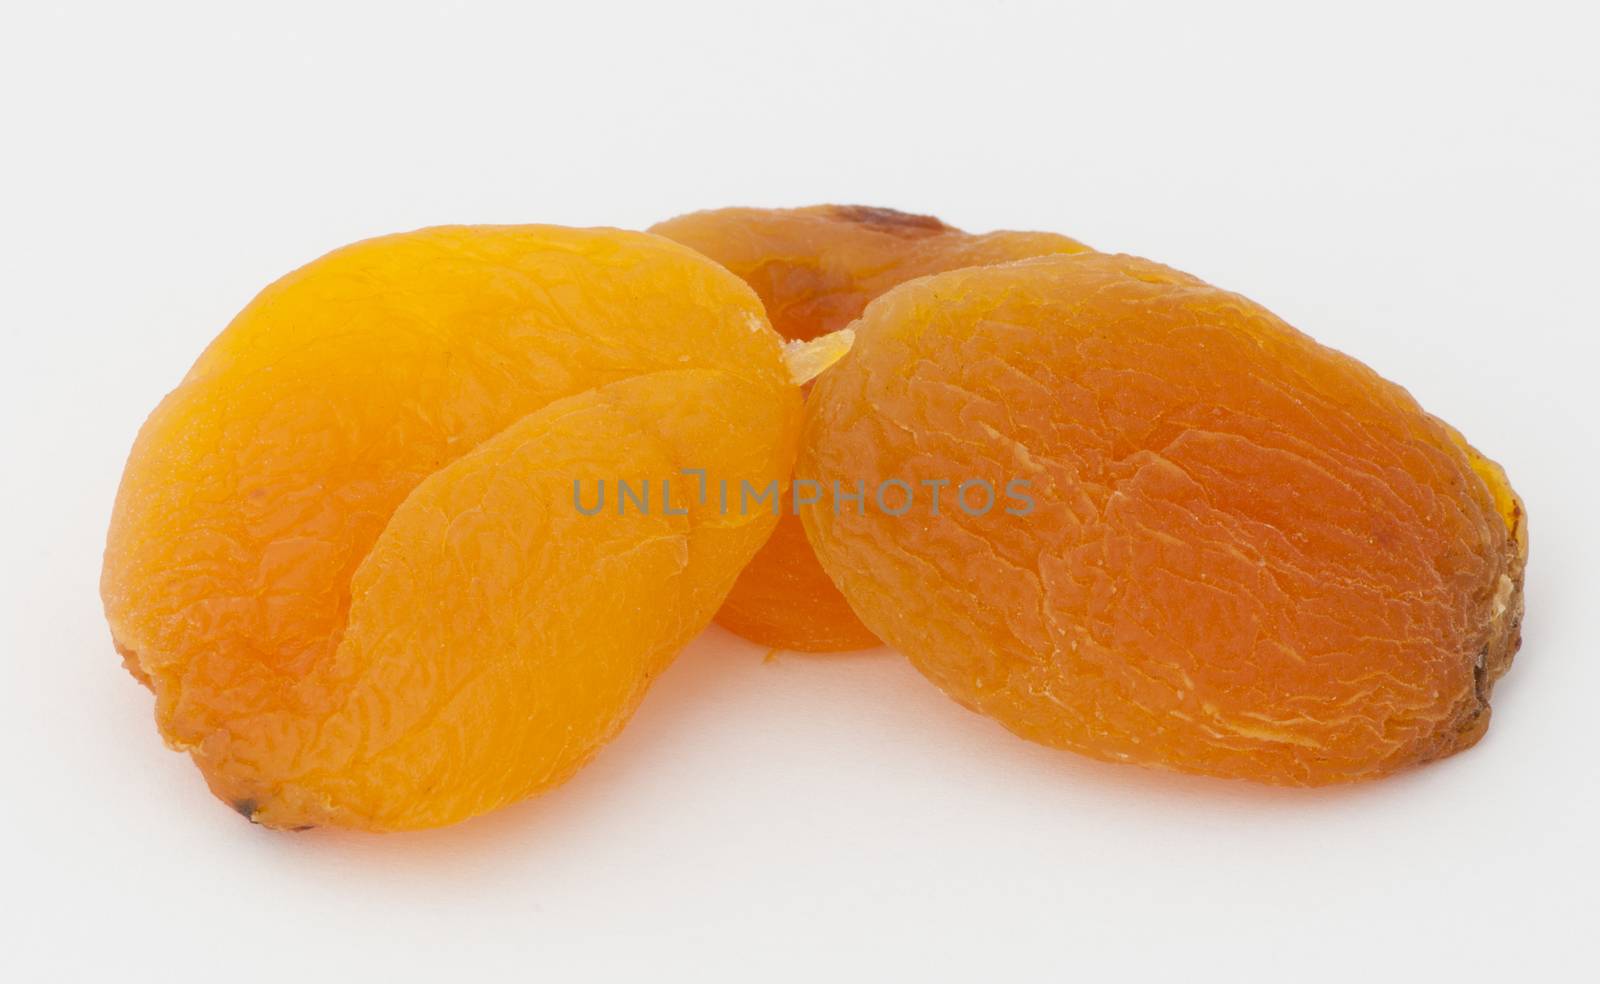 Dried apricots by deyan_georgiev